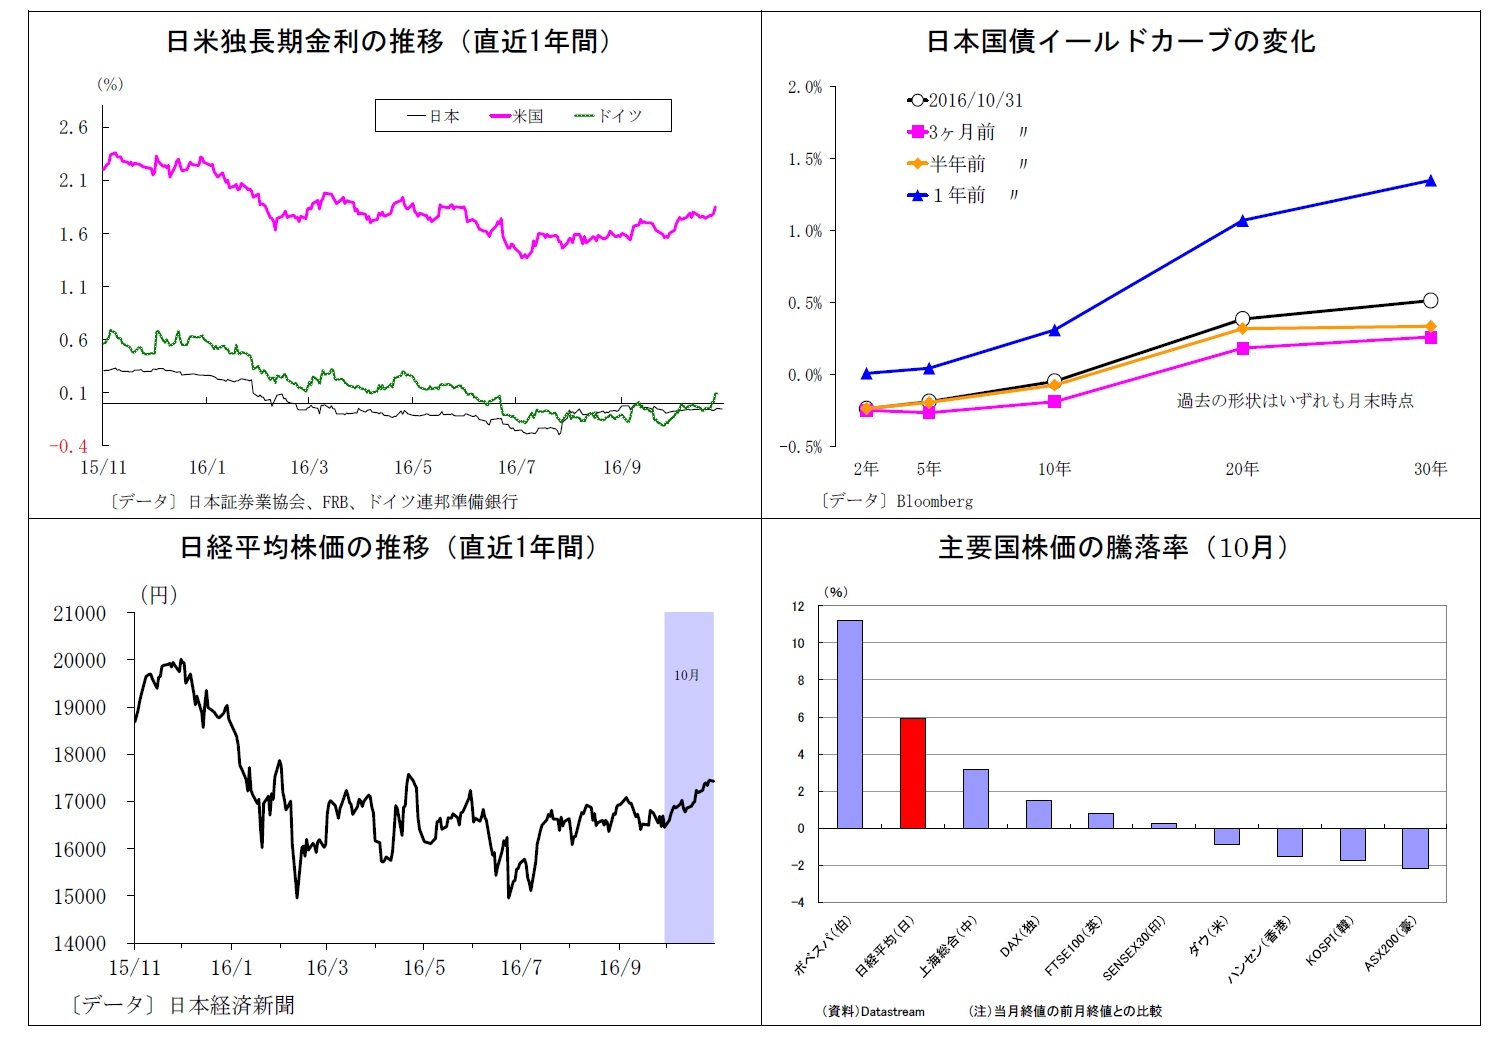 日米独長期金利の推移（直近1年間）/日本国債イールドカーブの変化/日経平均株価の推移（直近1年間）/主要国株価の騰落率（10月）